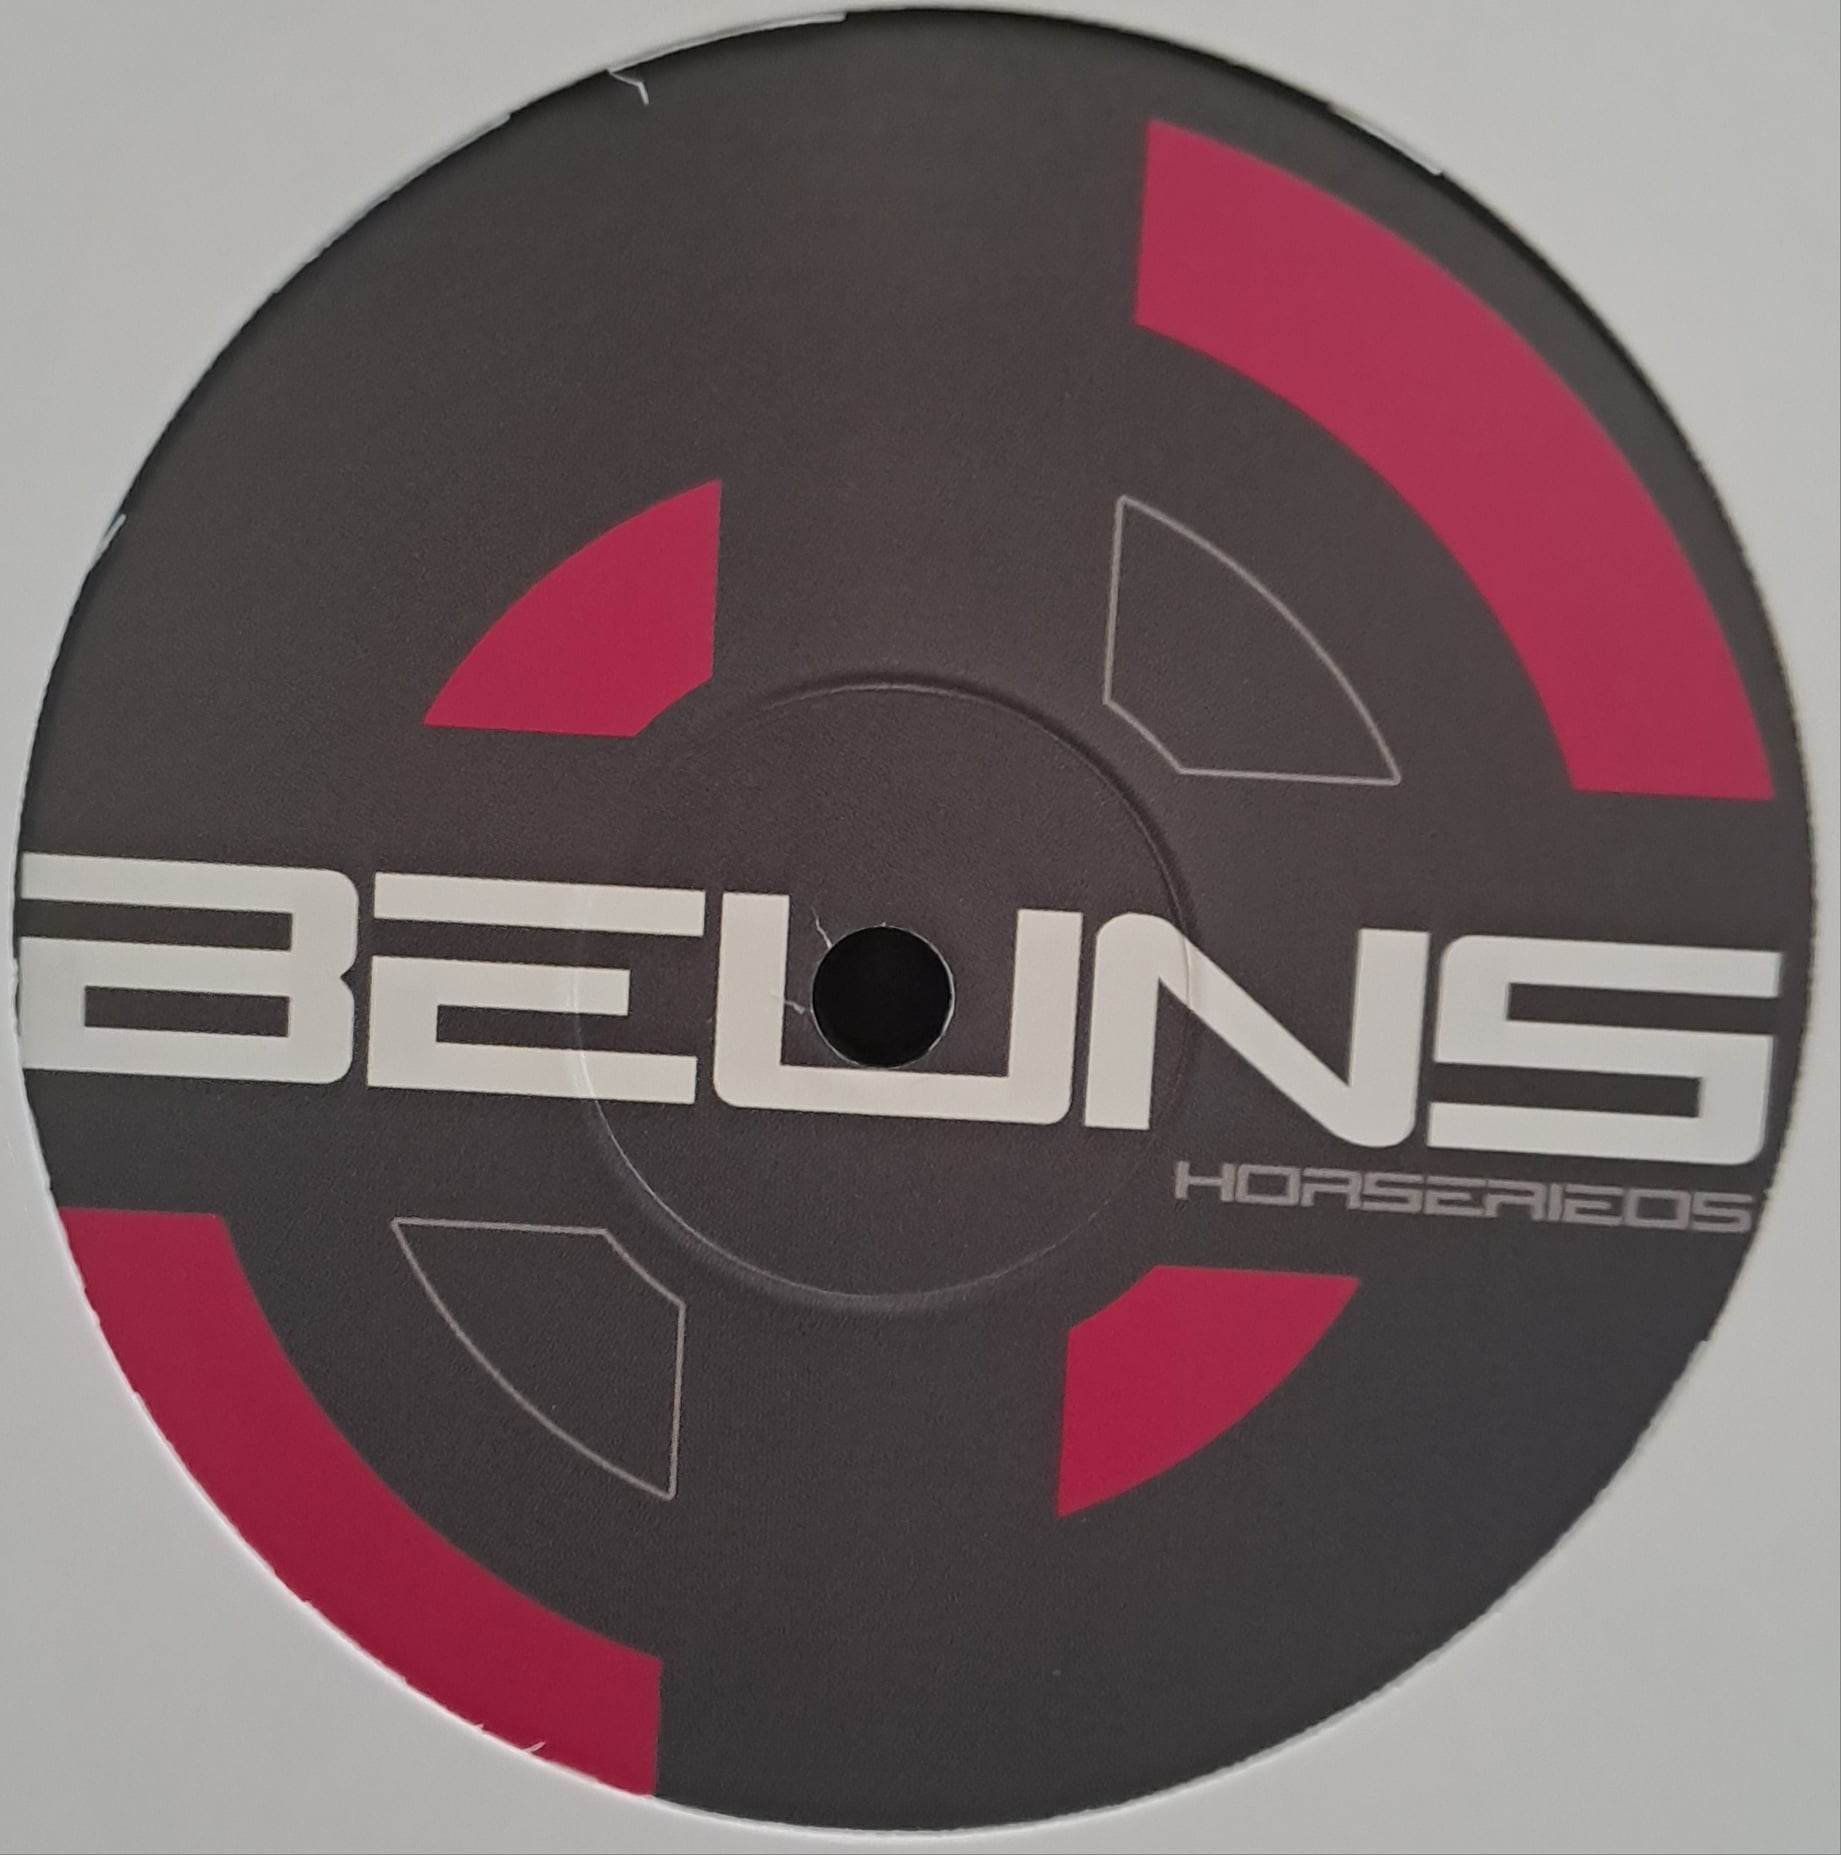 Beuns Horserie 05 RP - vinyle freetekno